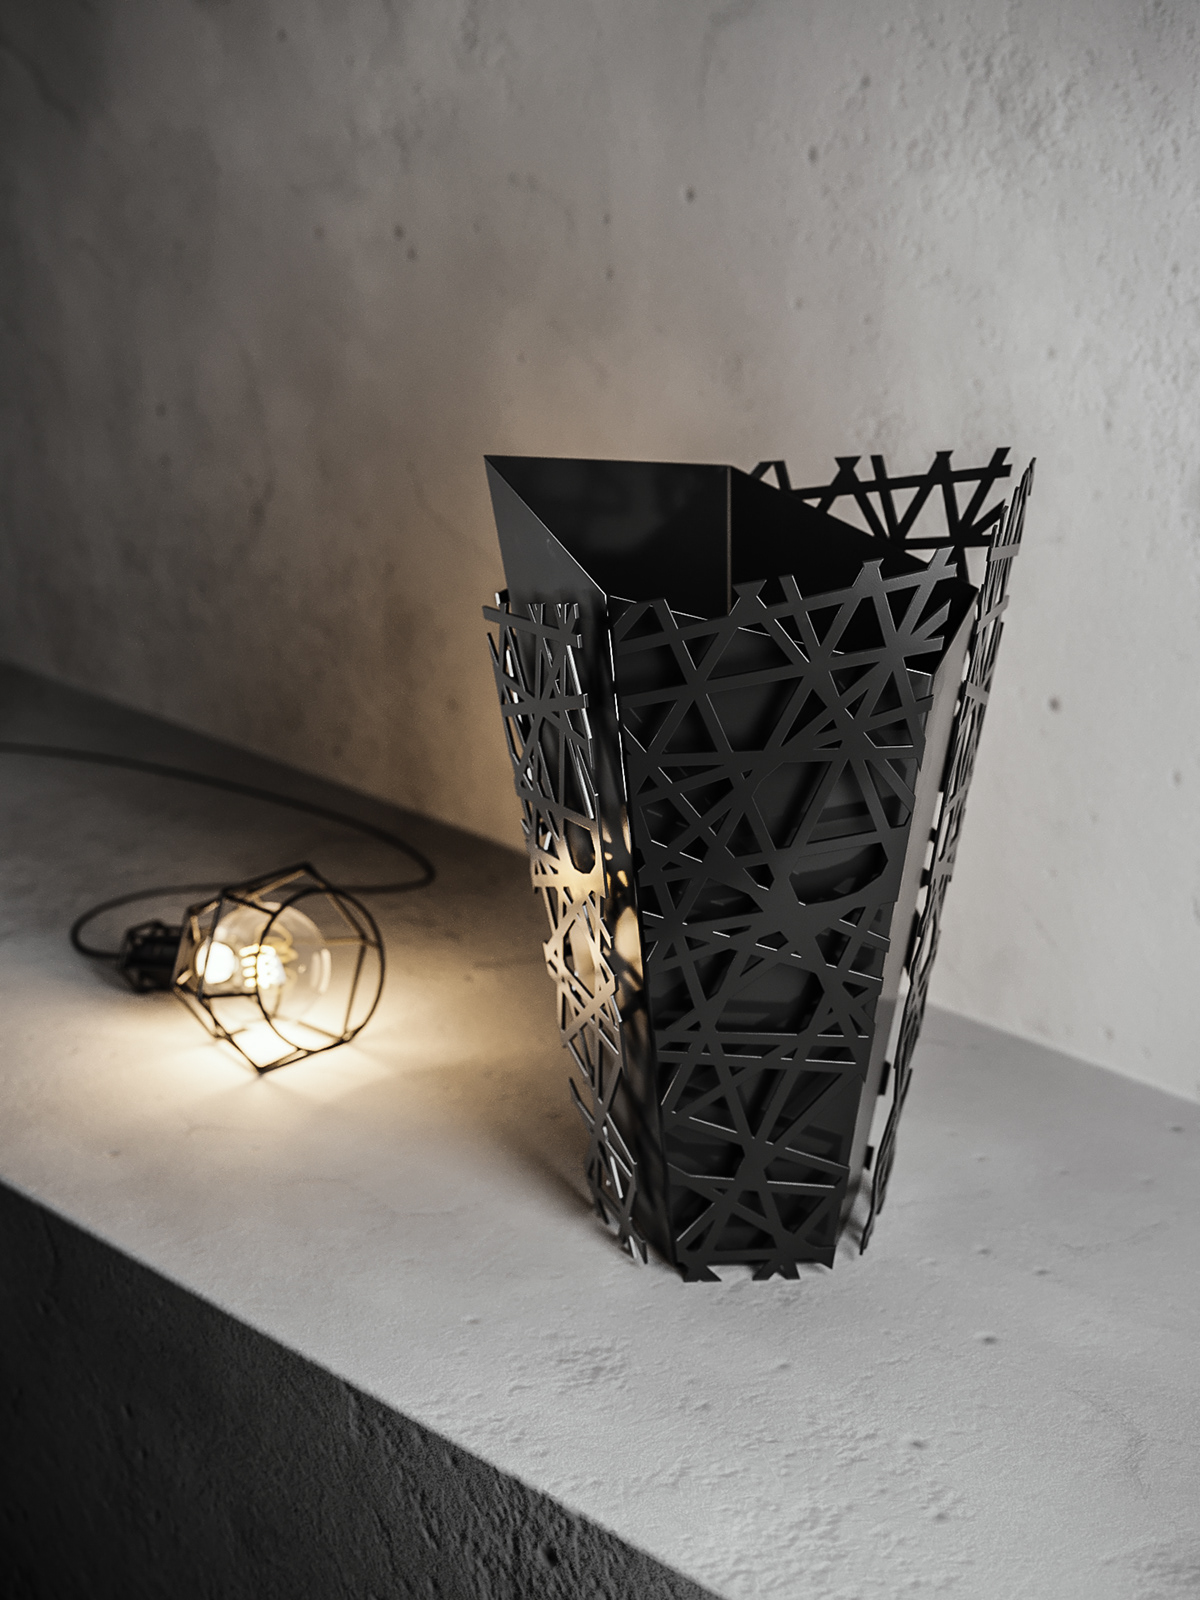 3ds max corona renderer industrial design  decor interior design  rendering 3D model product photoshop Render